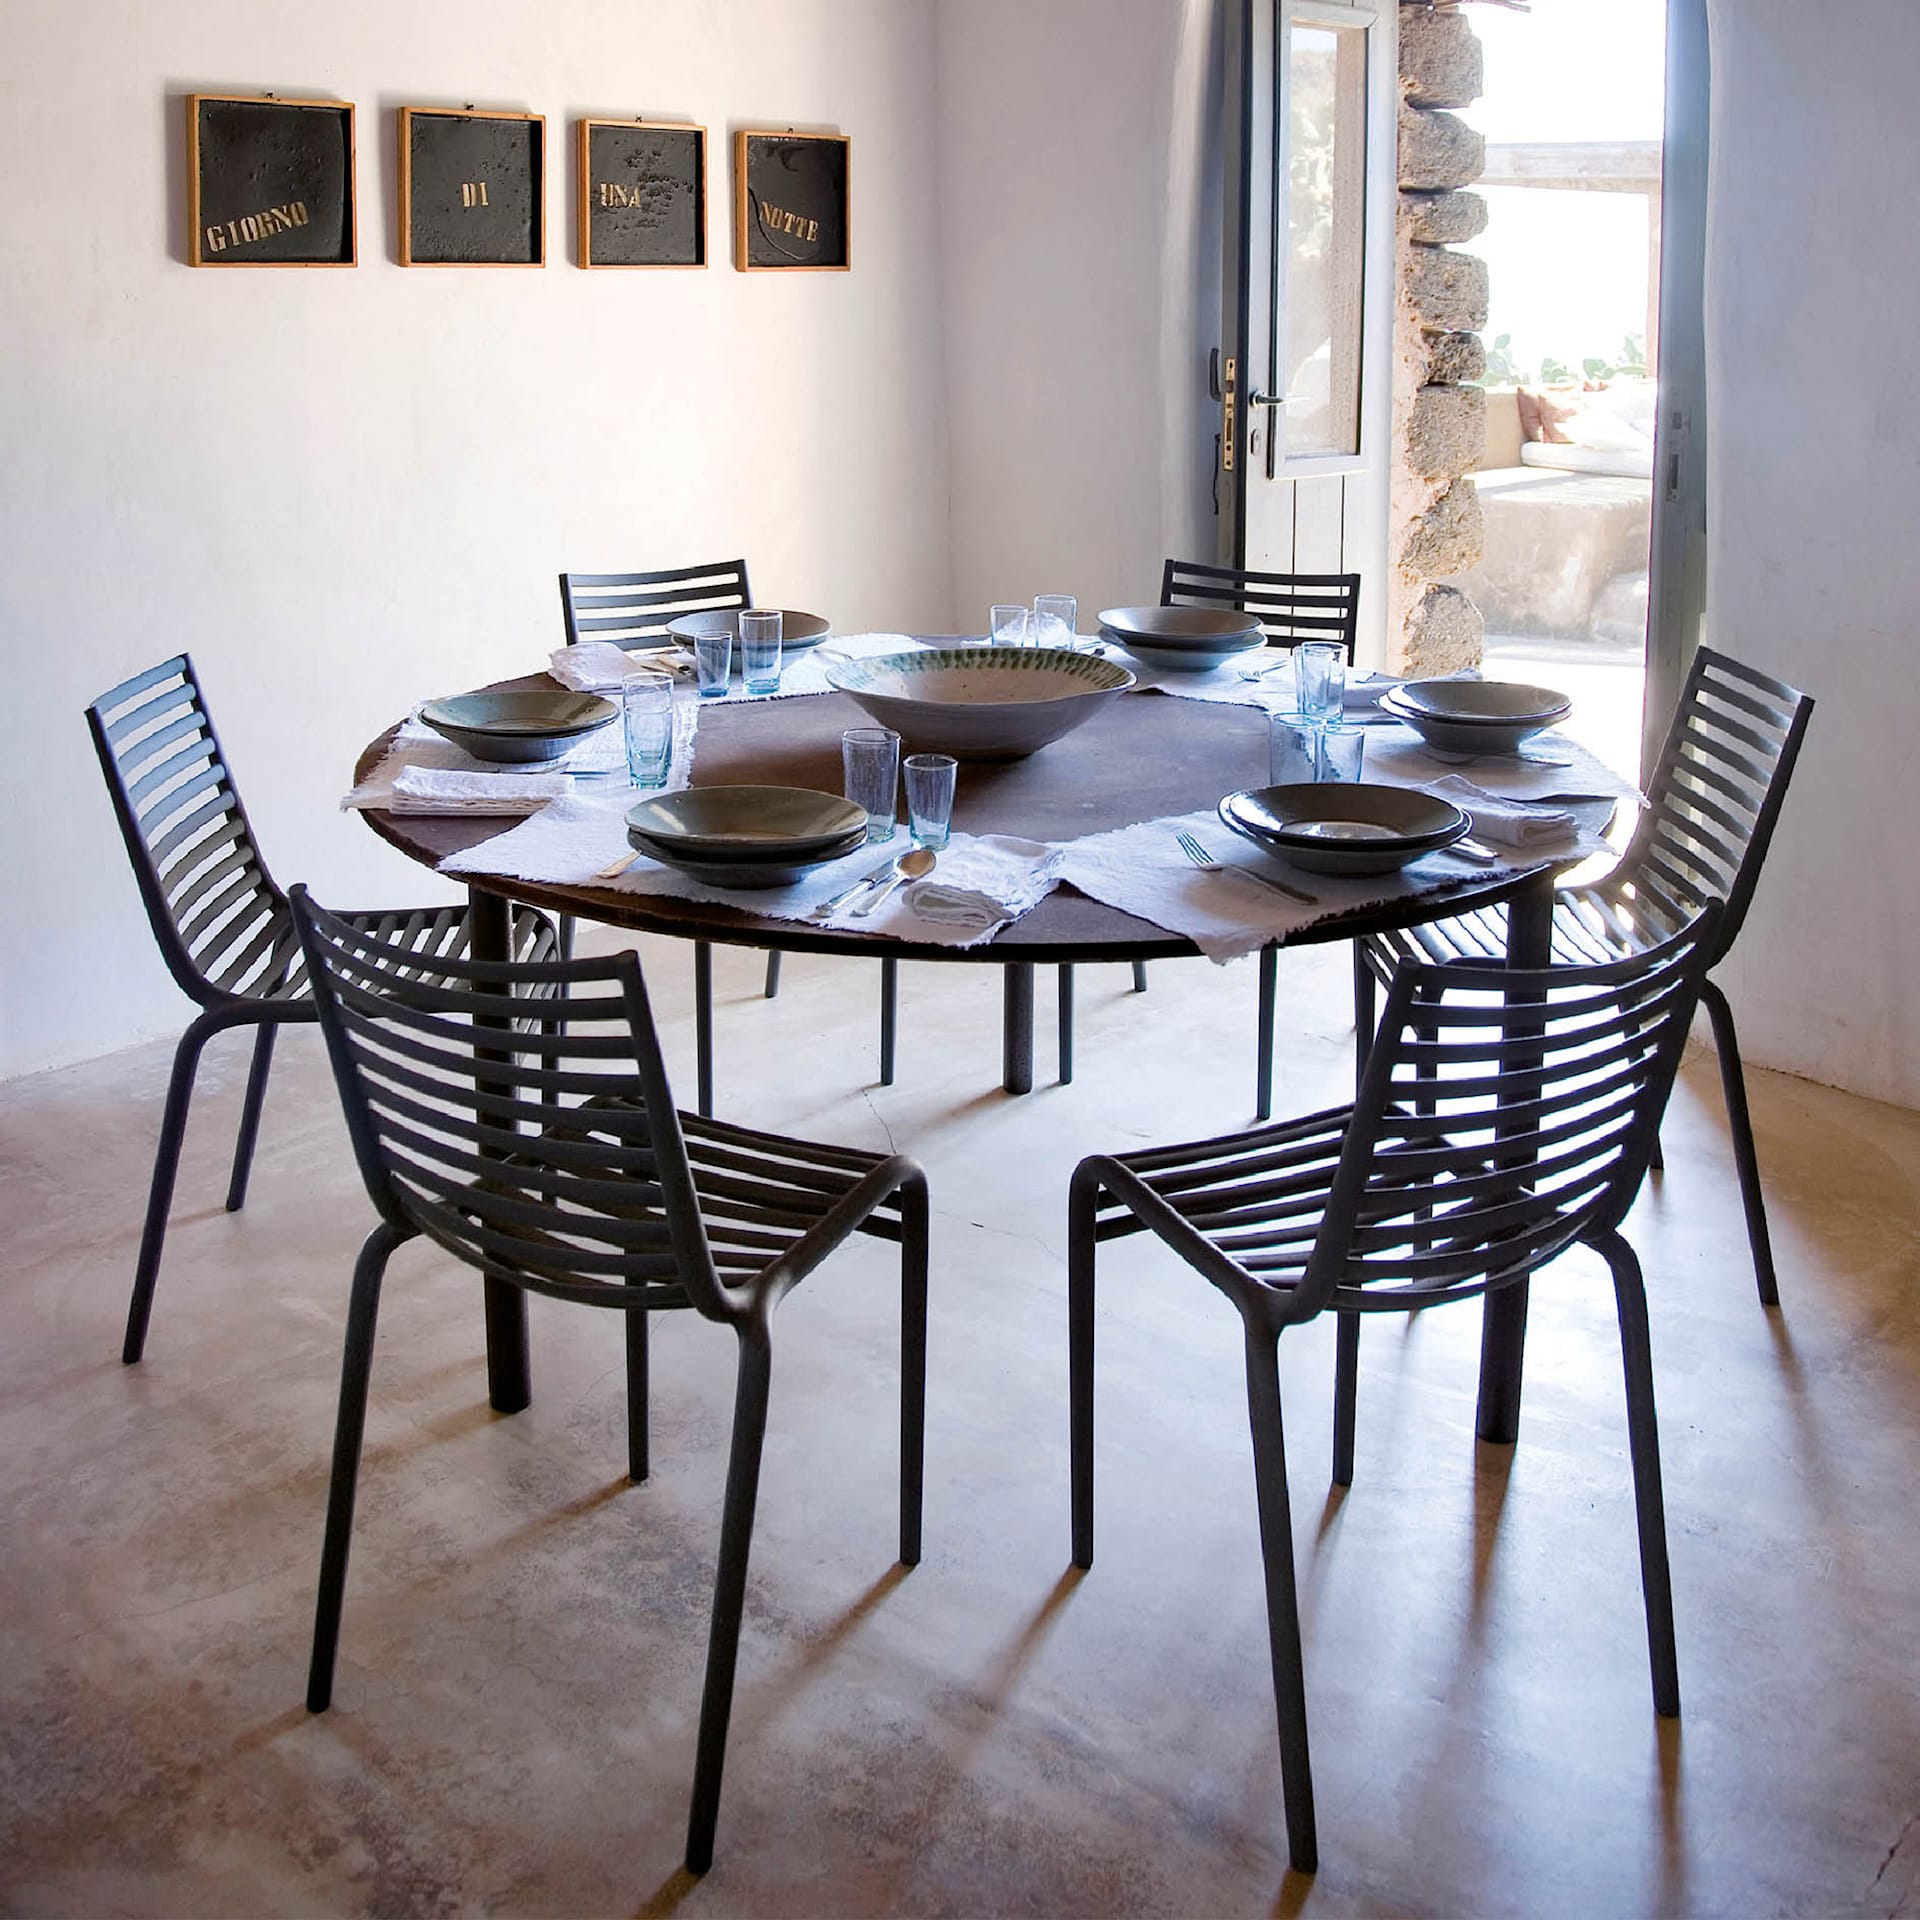 PIP-e Chair Green Collection - Driade - Philippe Starck - NO GA